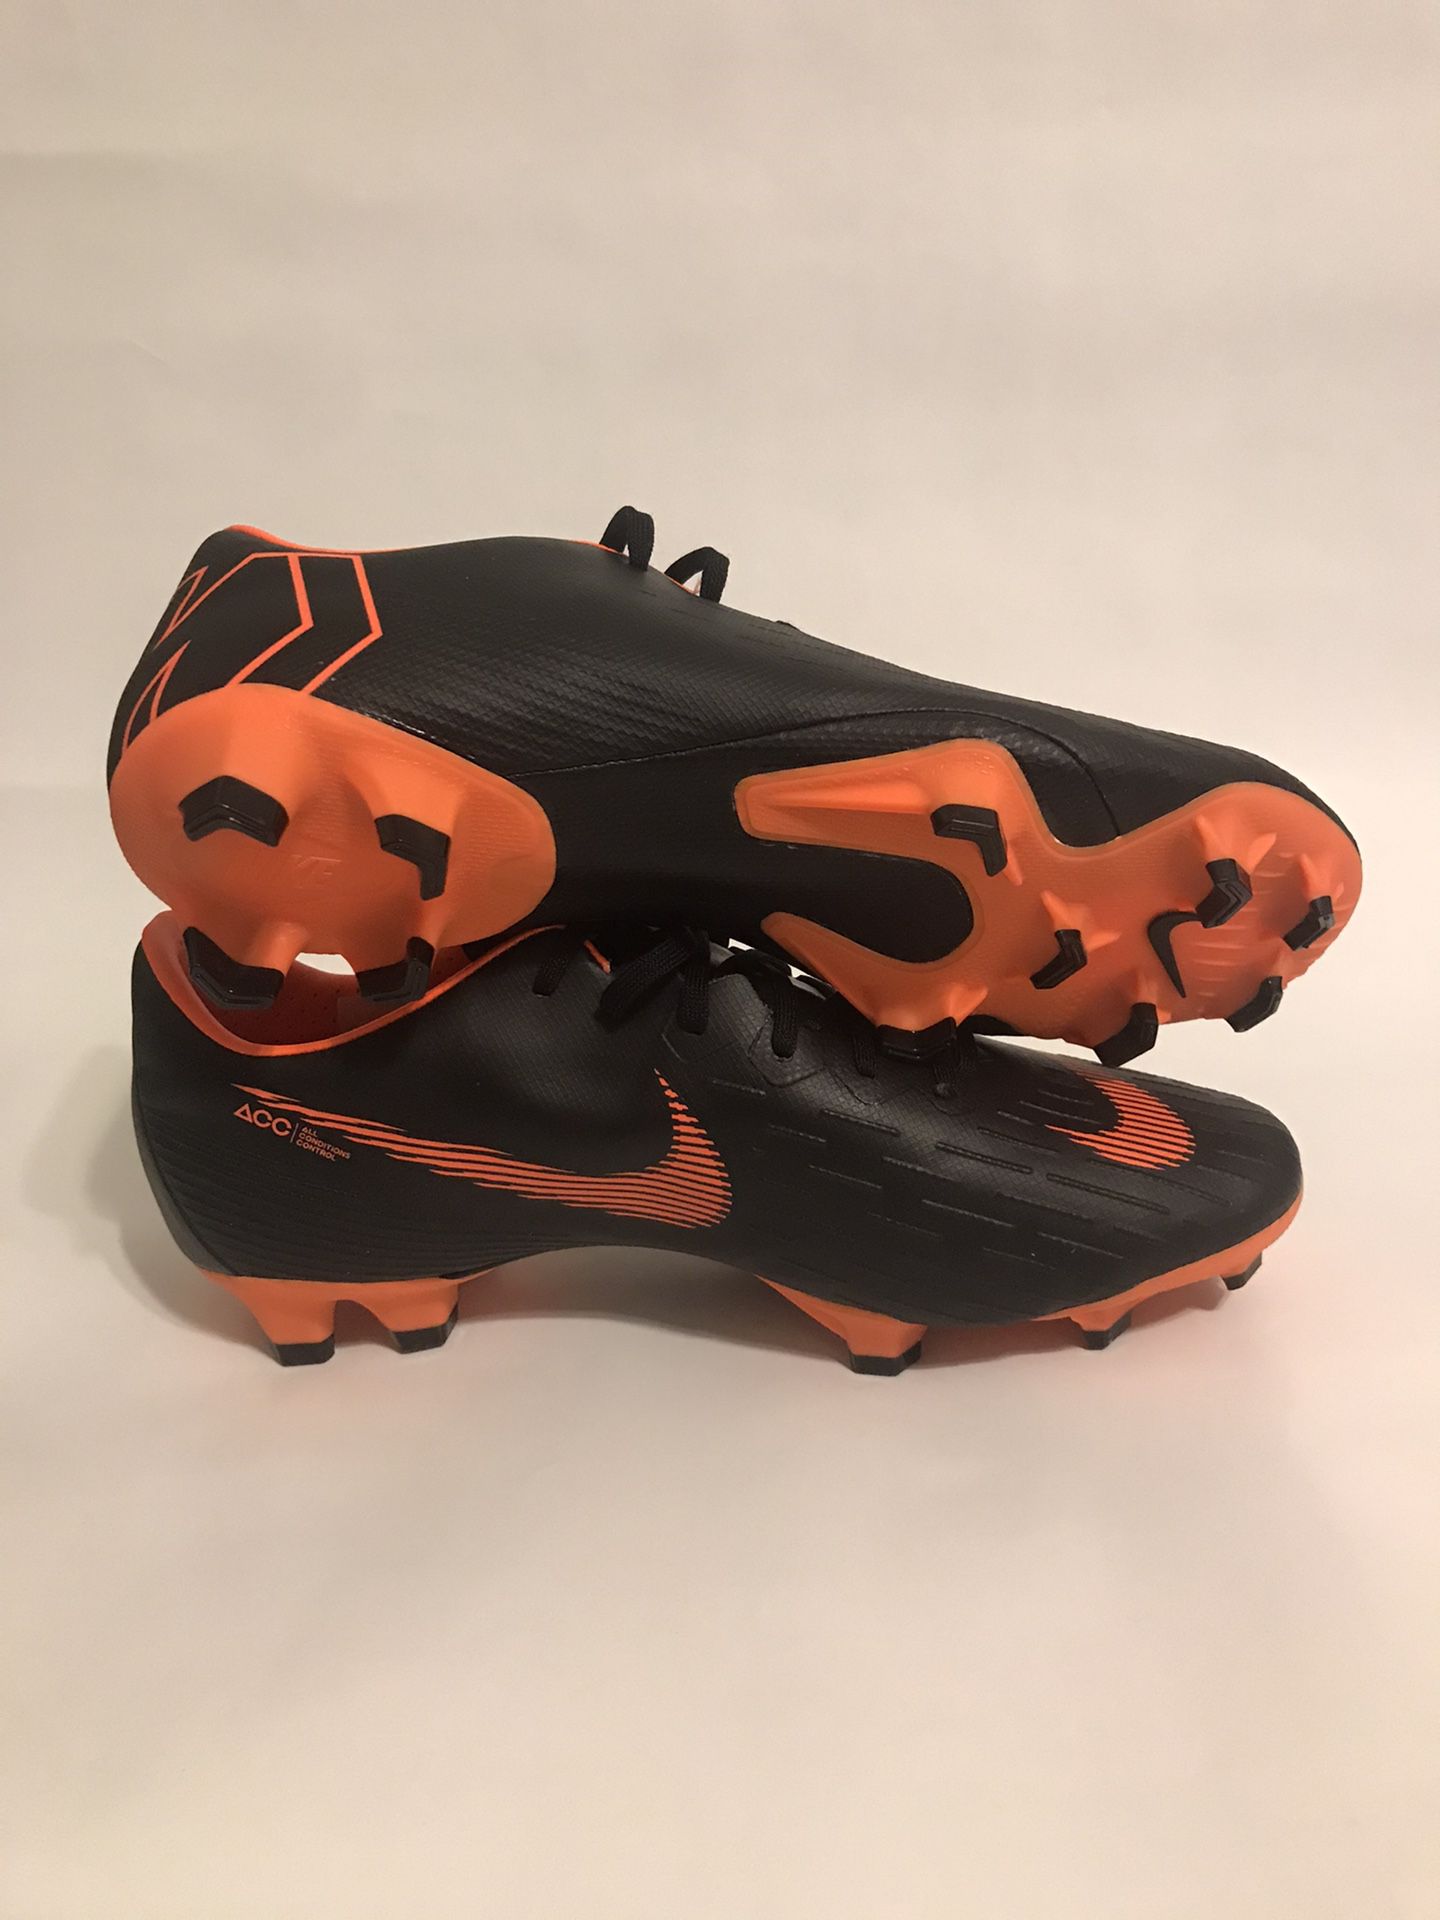 Nike Mercurial Vapor XII Pro FG Soccer Shoes sz 6.5 (Black/Total Orange)